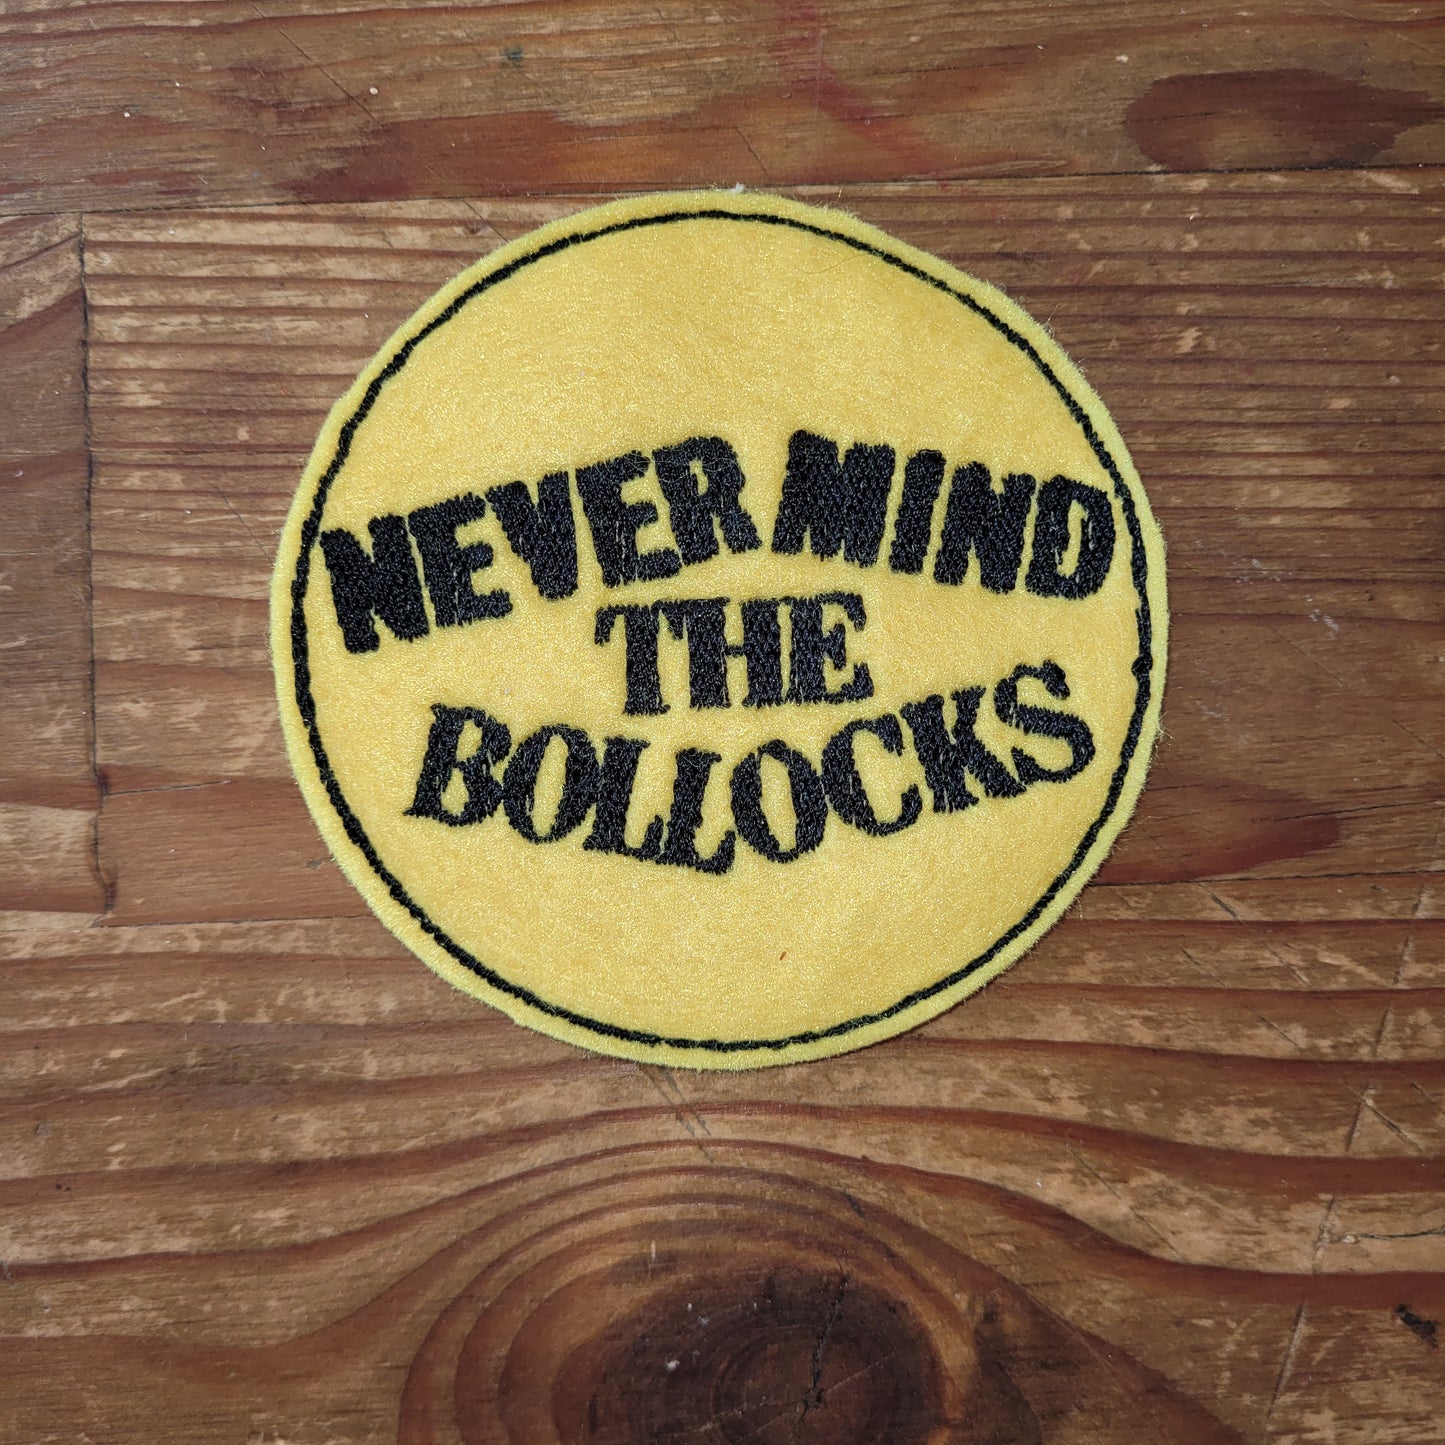 Never Mind The Bollocks